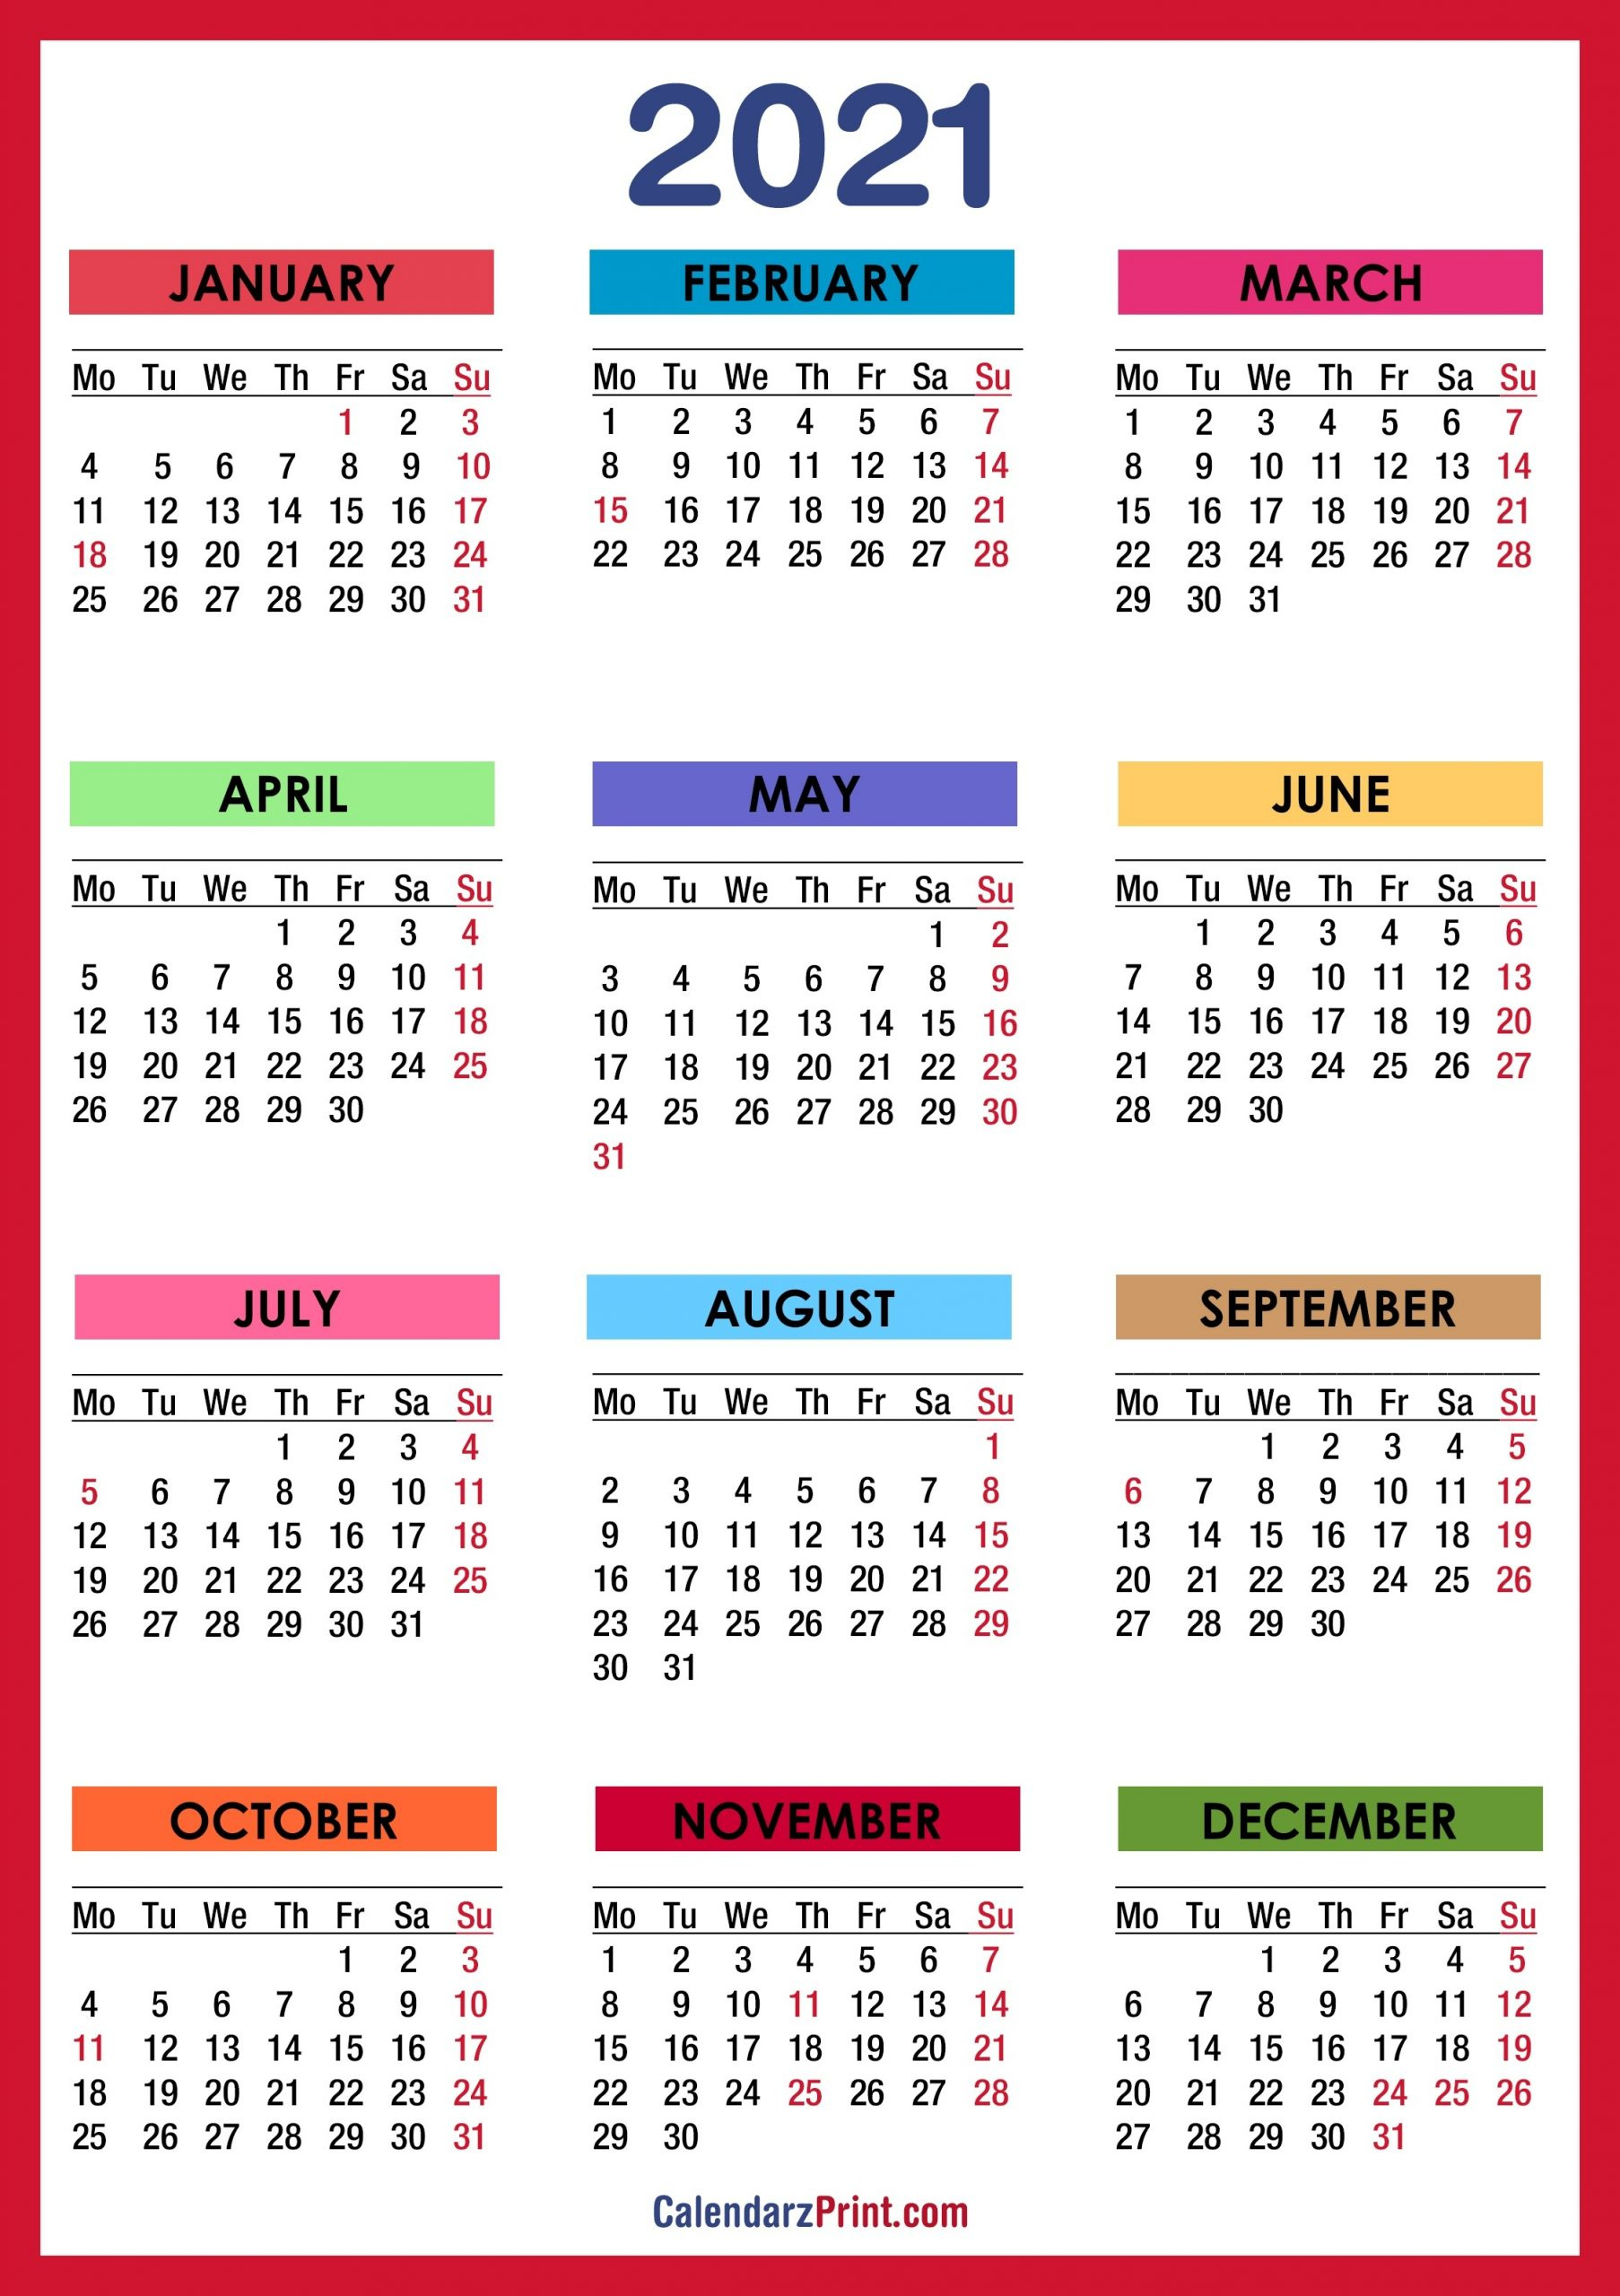 Printable Vacation Calendar For 2021 | Calendar Template December 2021 Calendar Australia